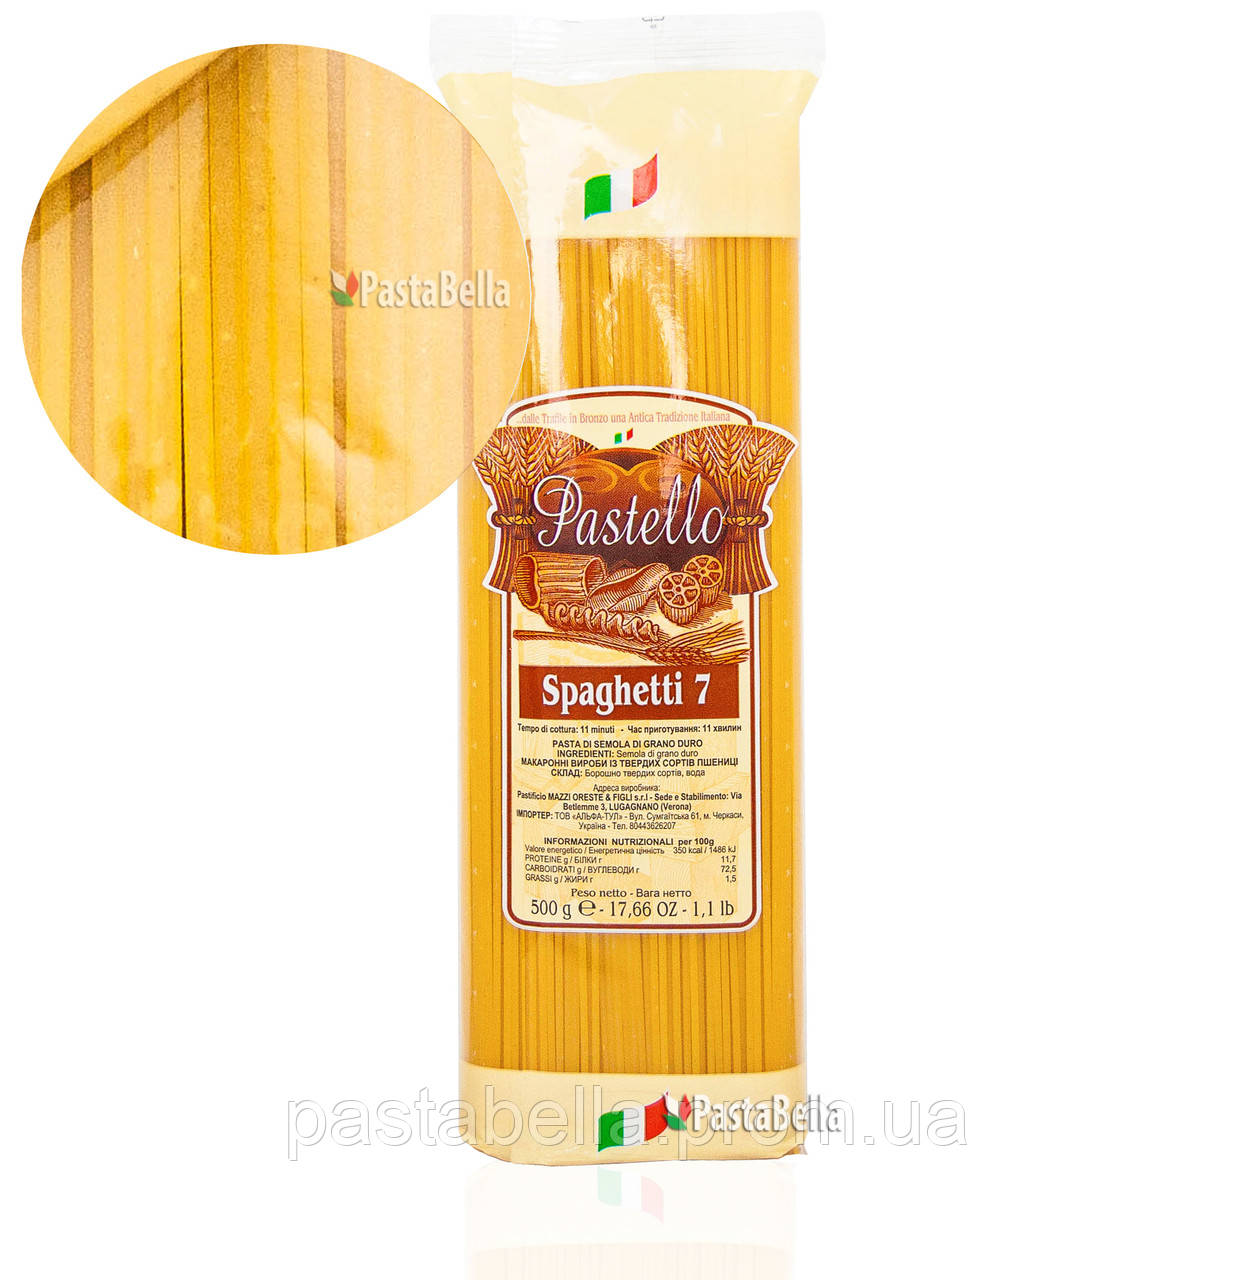 Італійські Спагетті Класичні - "Spaghetti №7" Pastello 500g